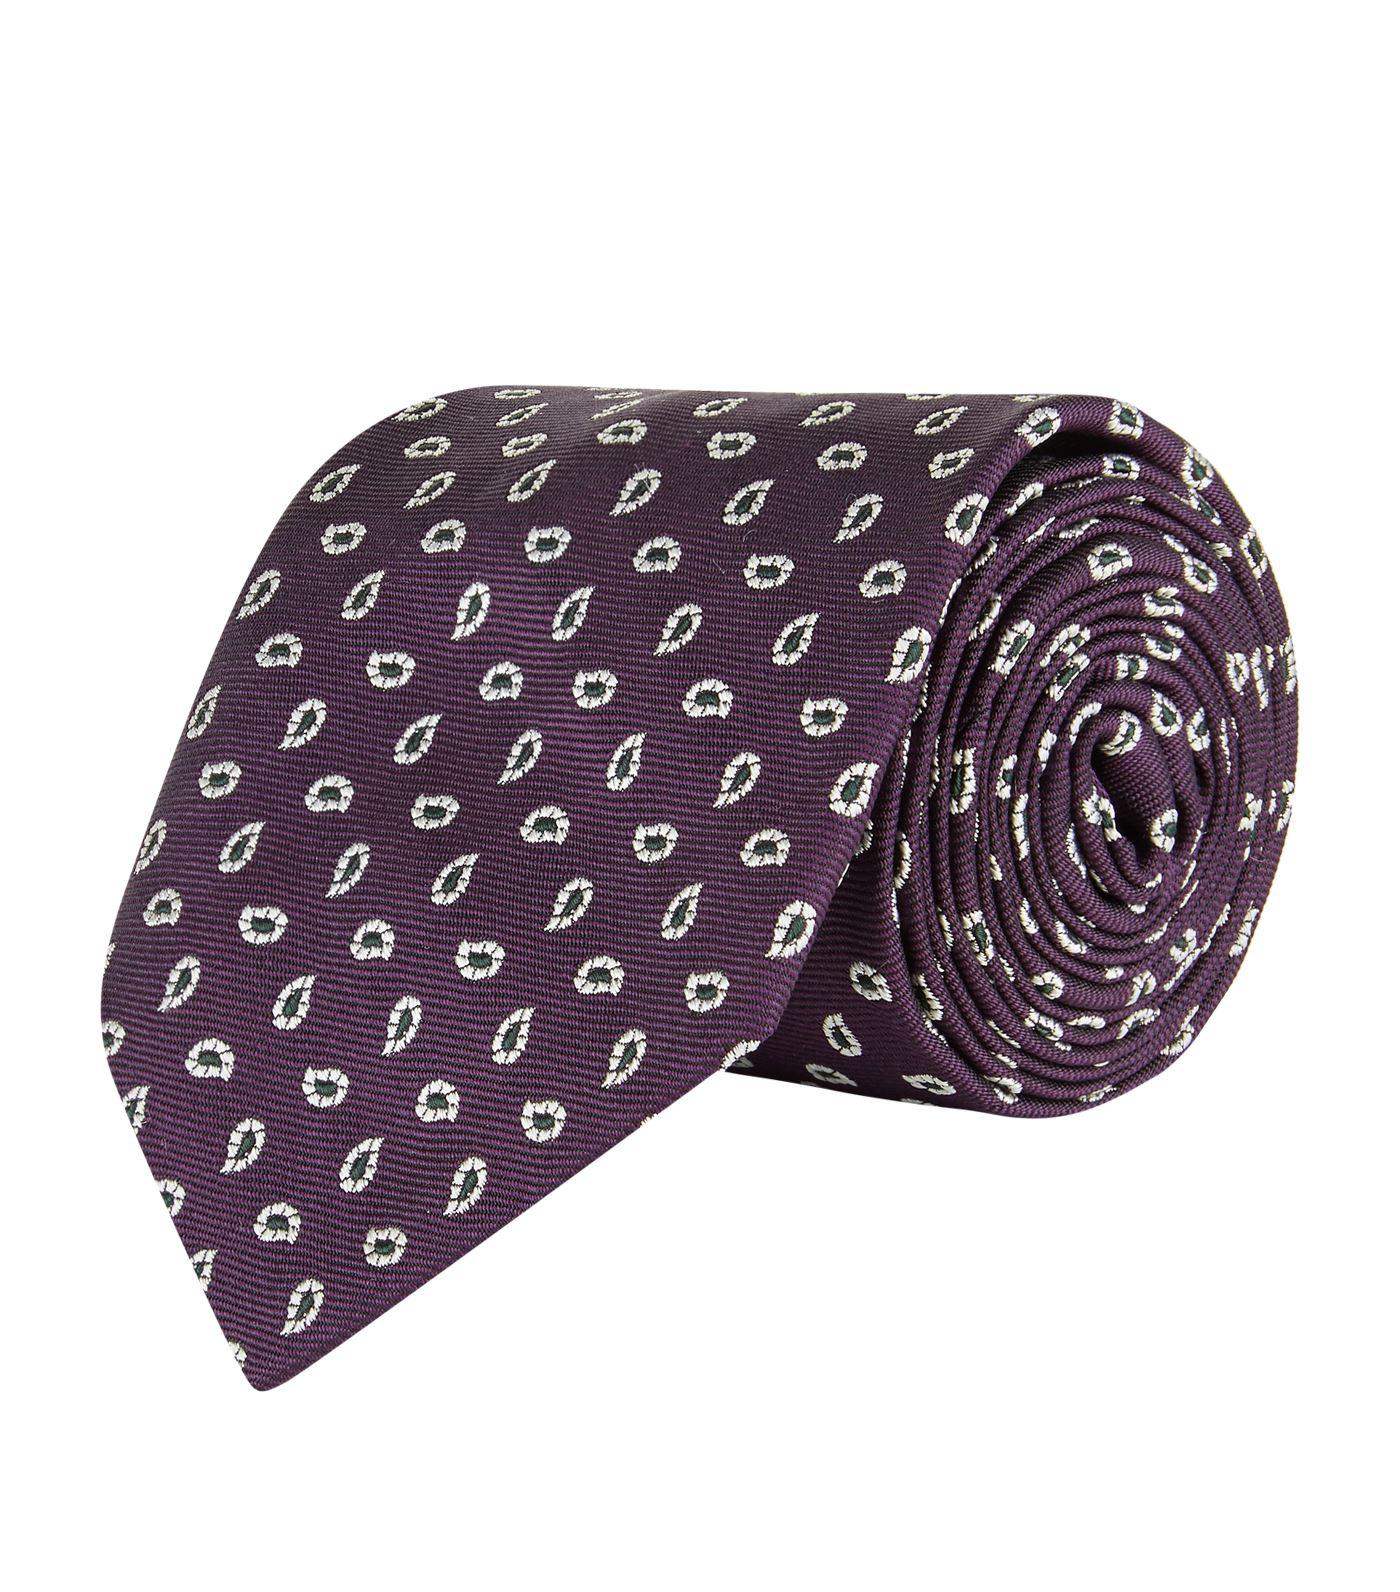 Polo Ralph Lauren Silk Print Tie in Purple for Men - Lyst